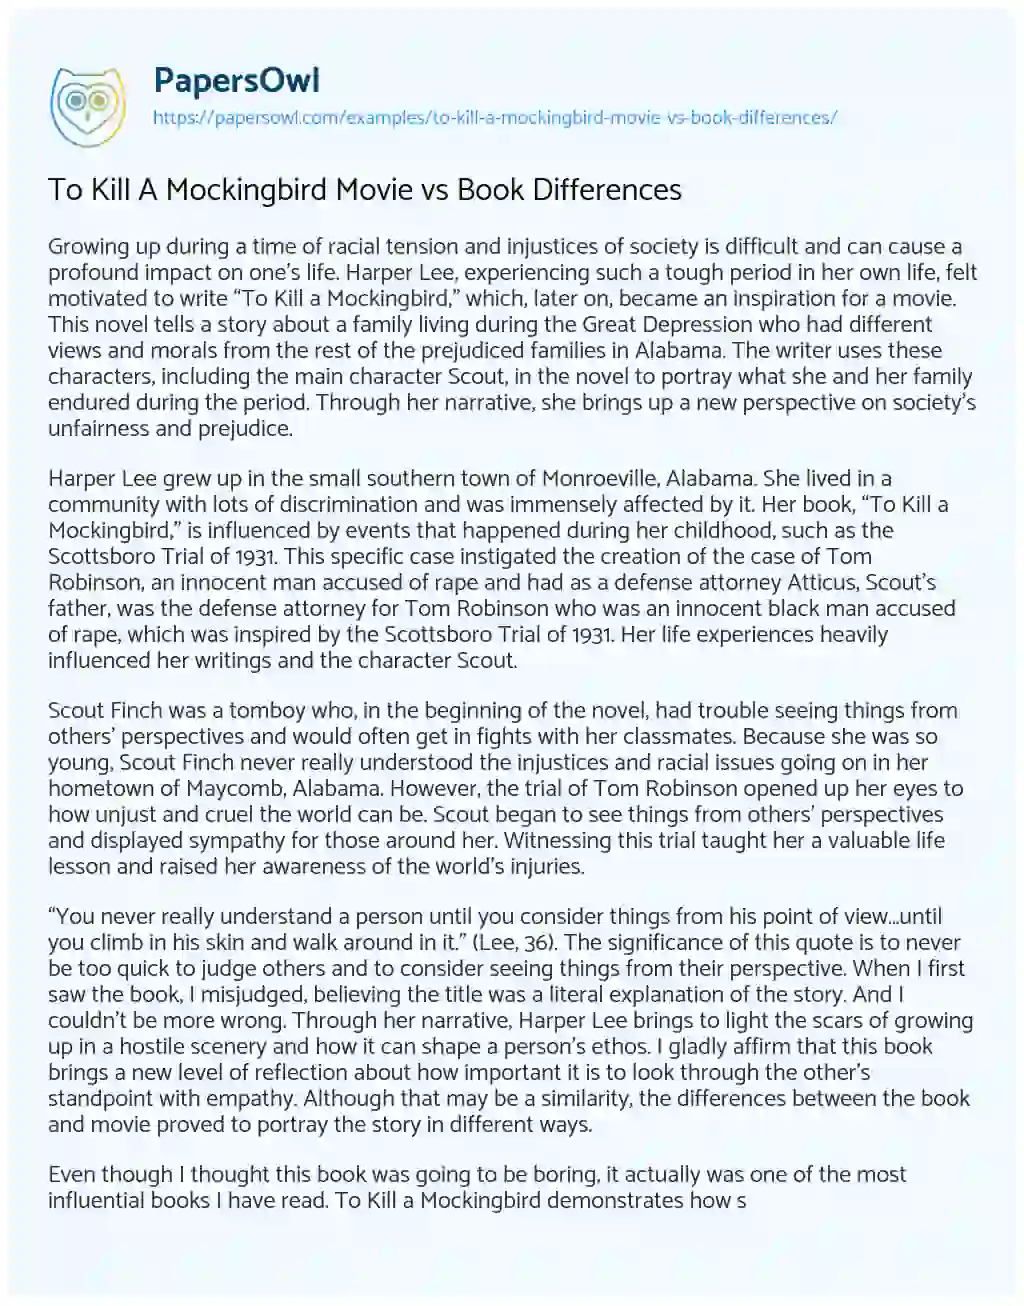 Essay on To Kill a Mockingbird Movie Vs Book Differences